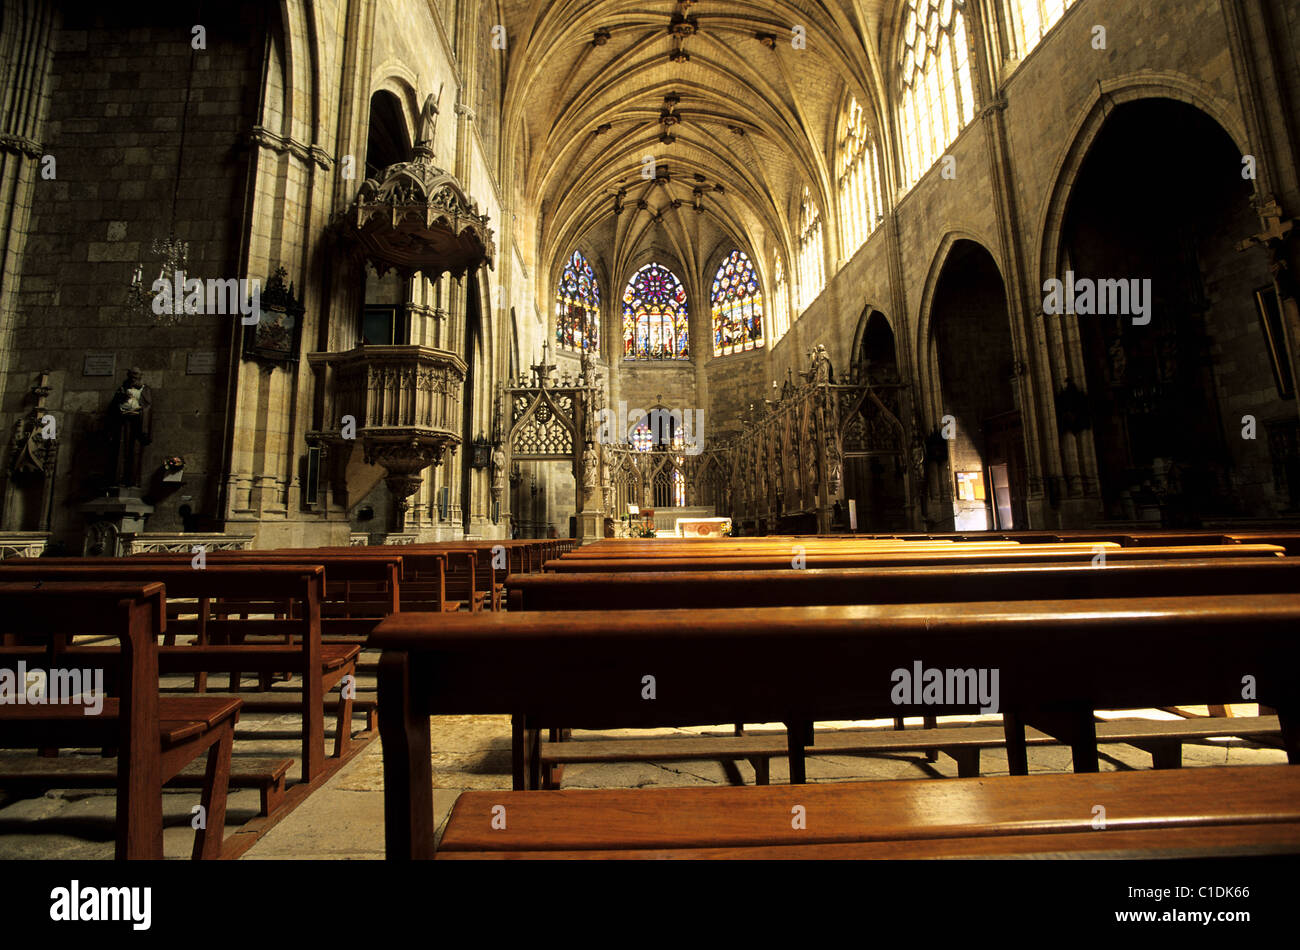 Saint gervais saint protais hi-res stock photography and images - Alamy